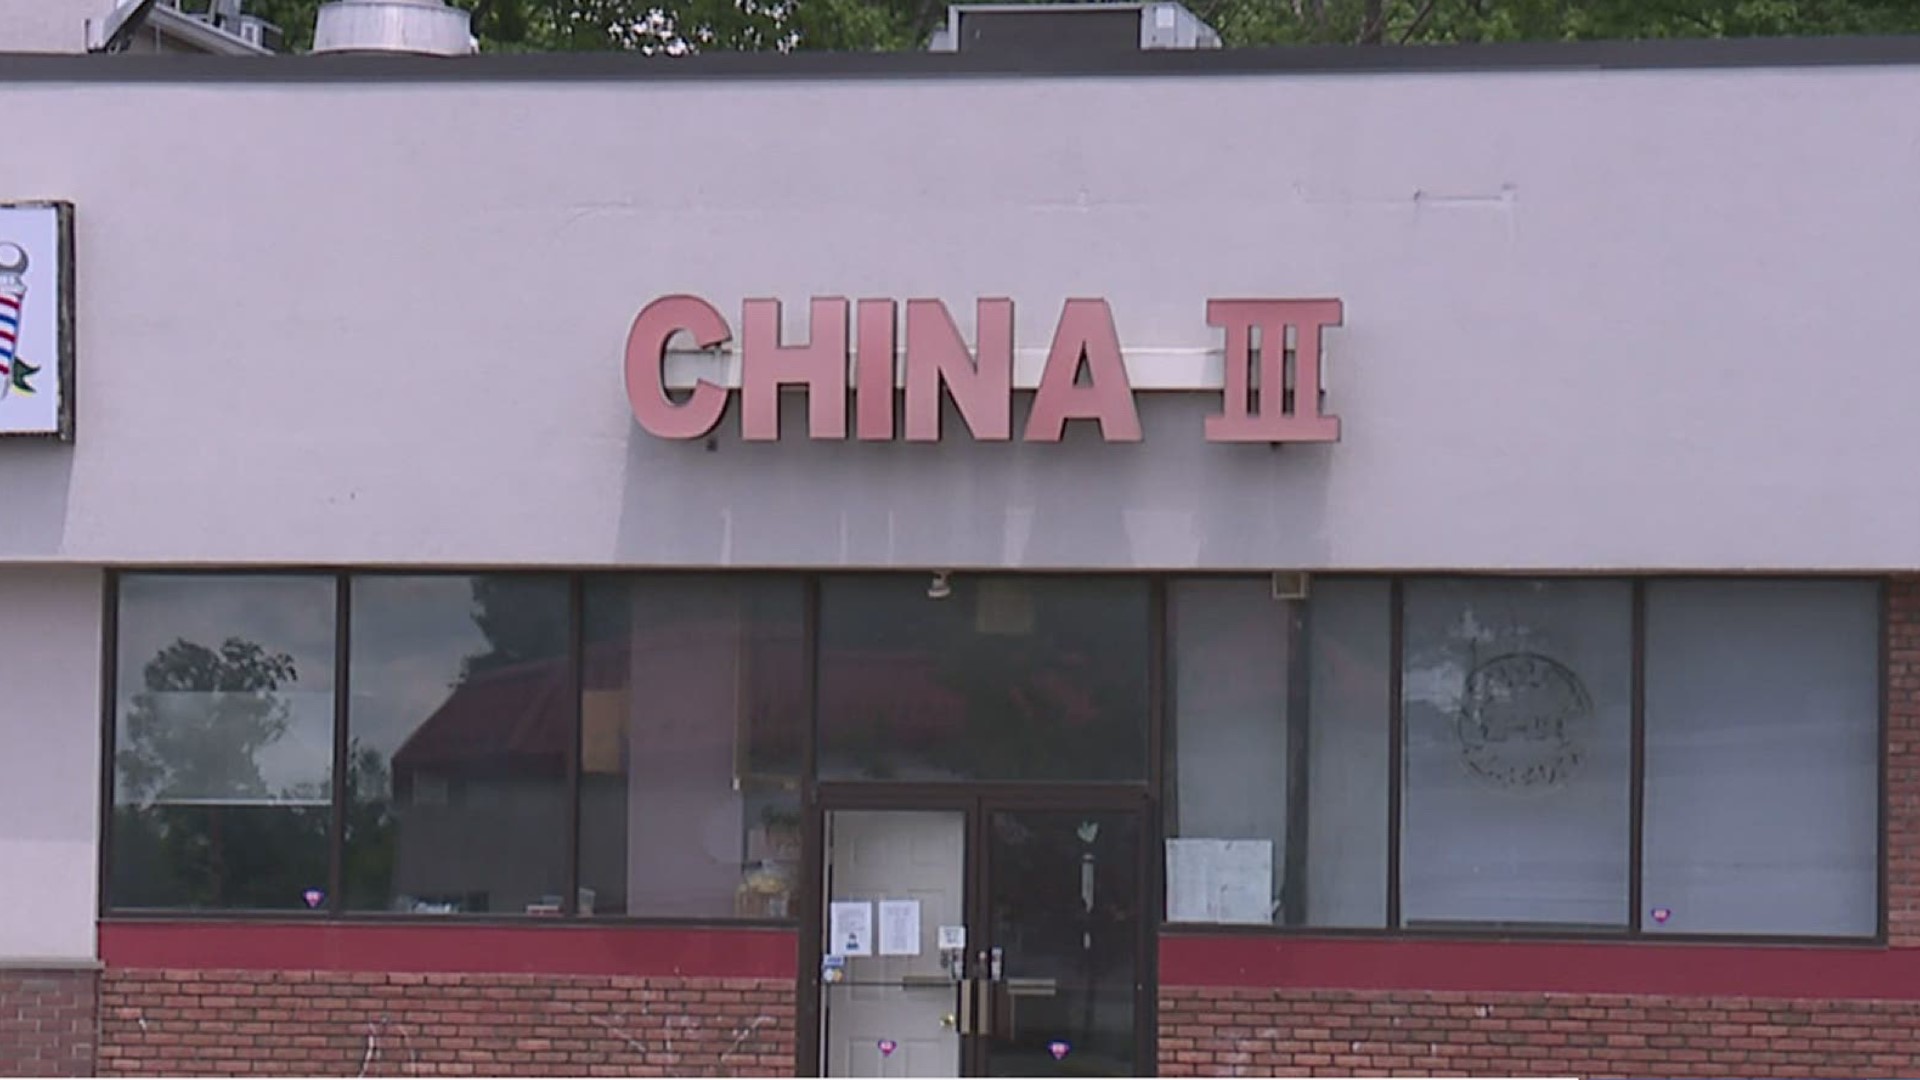 It happened Sunday night at China III Restaurant in Barrett Township.